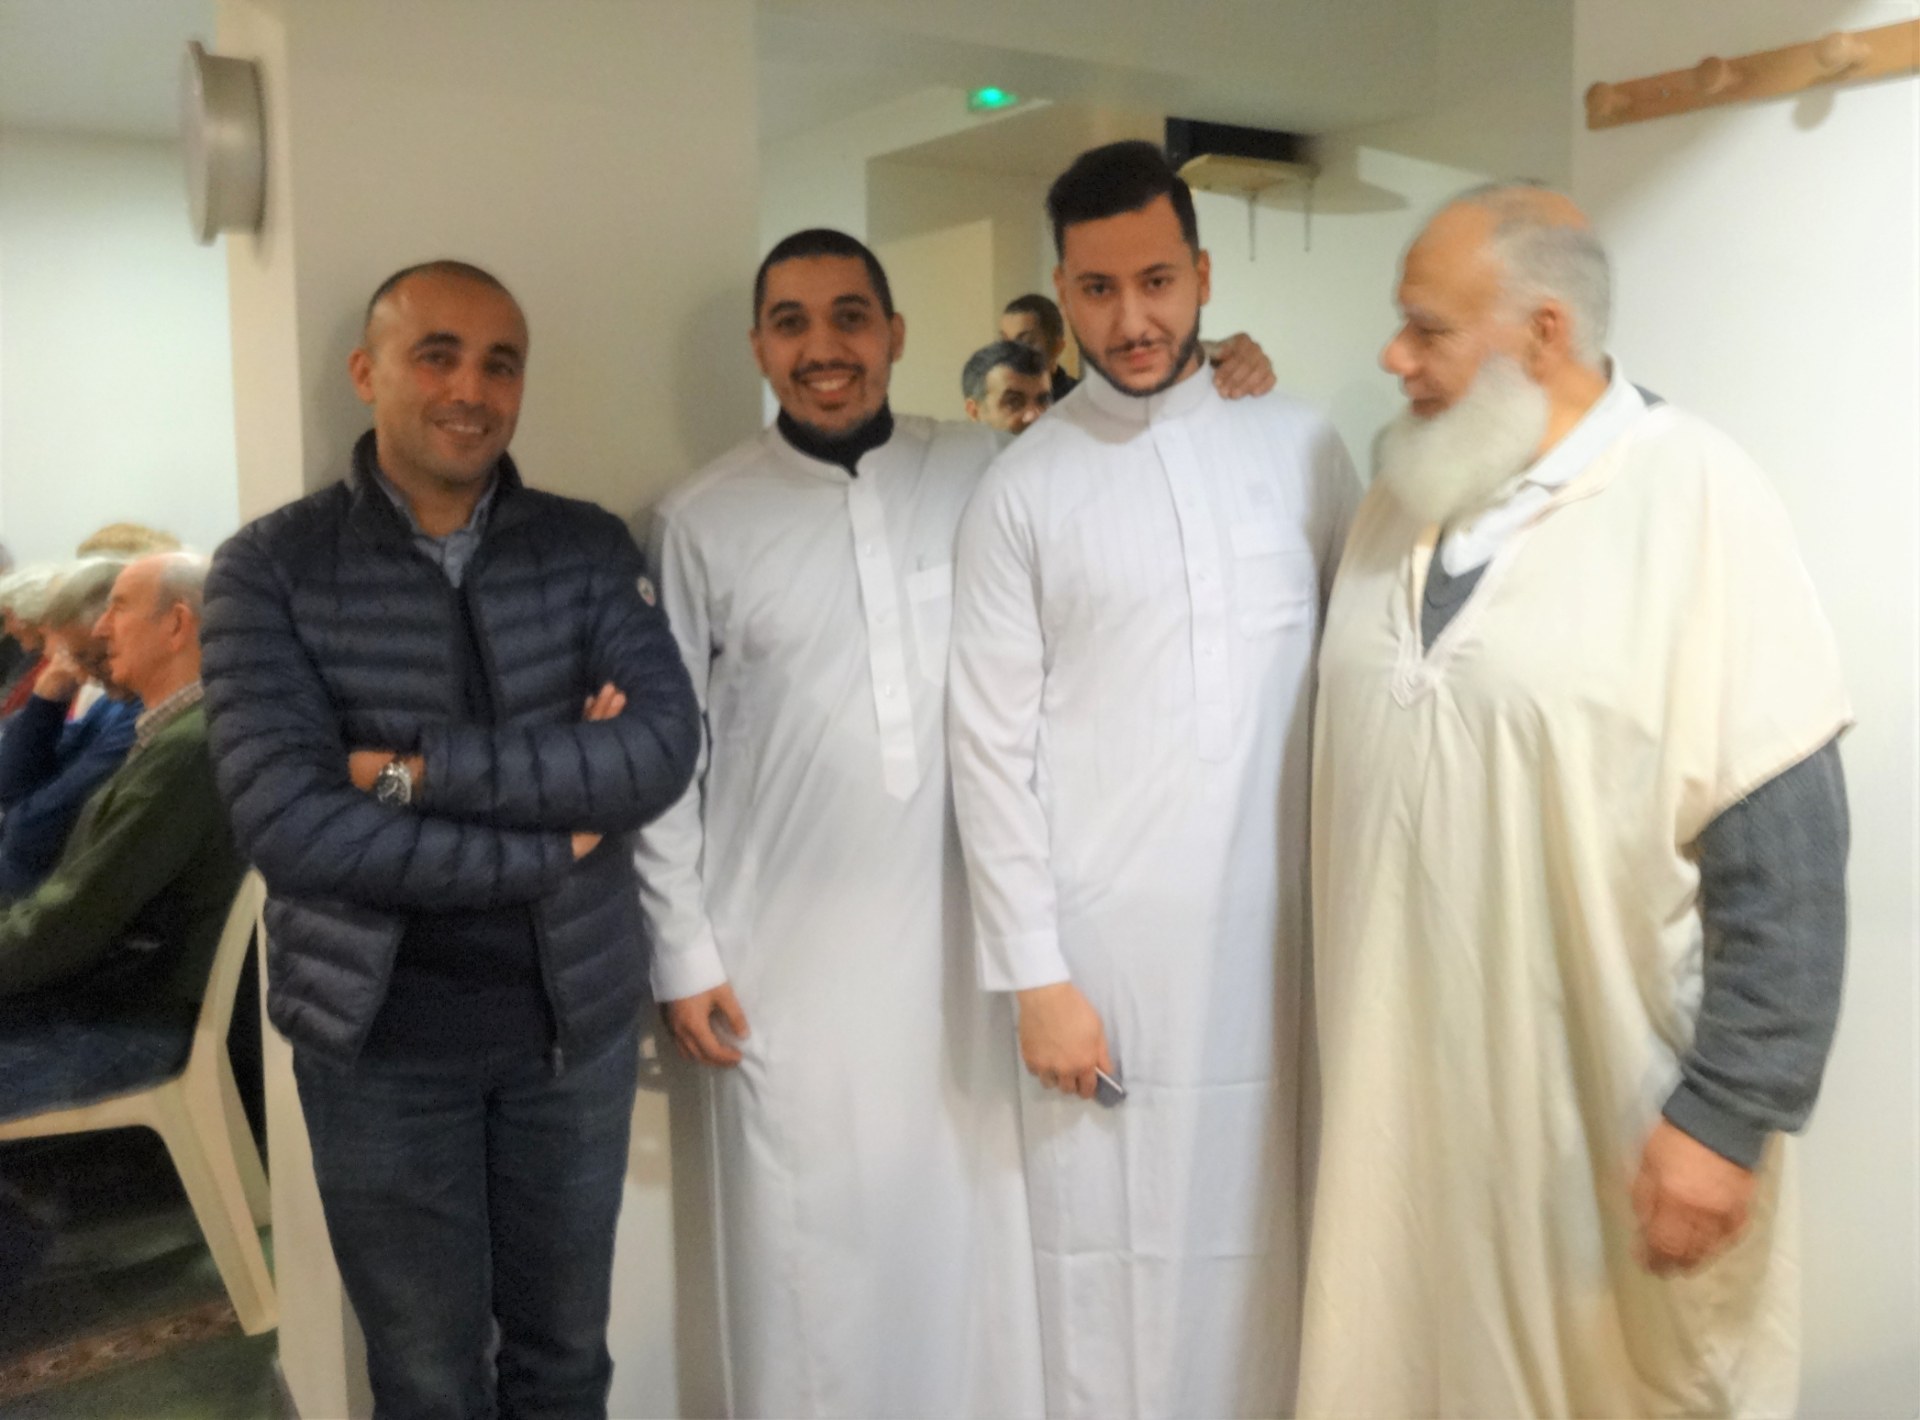 Visite mosquee 2018 -11-23 (3)